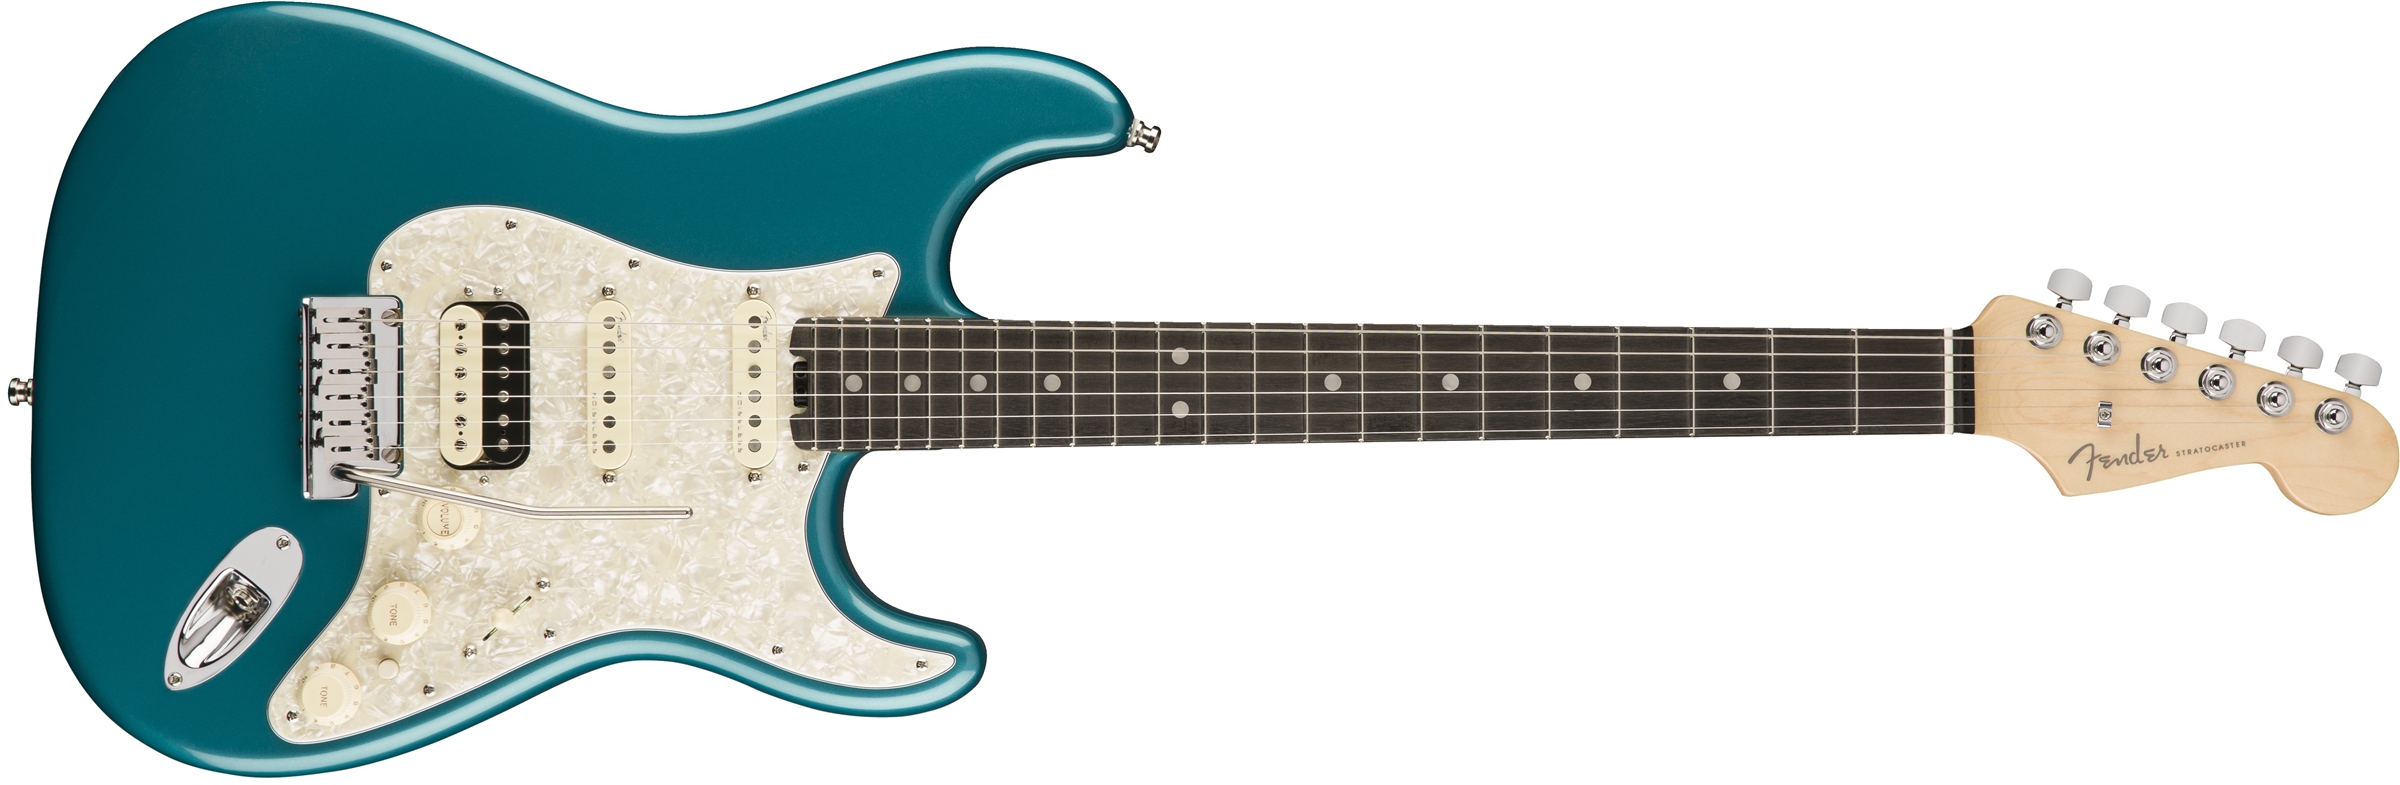 Fender品牌_电吉他_American Ultra_0118020712 产品介绍 - FAST发时达乐器